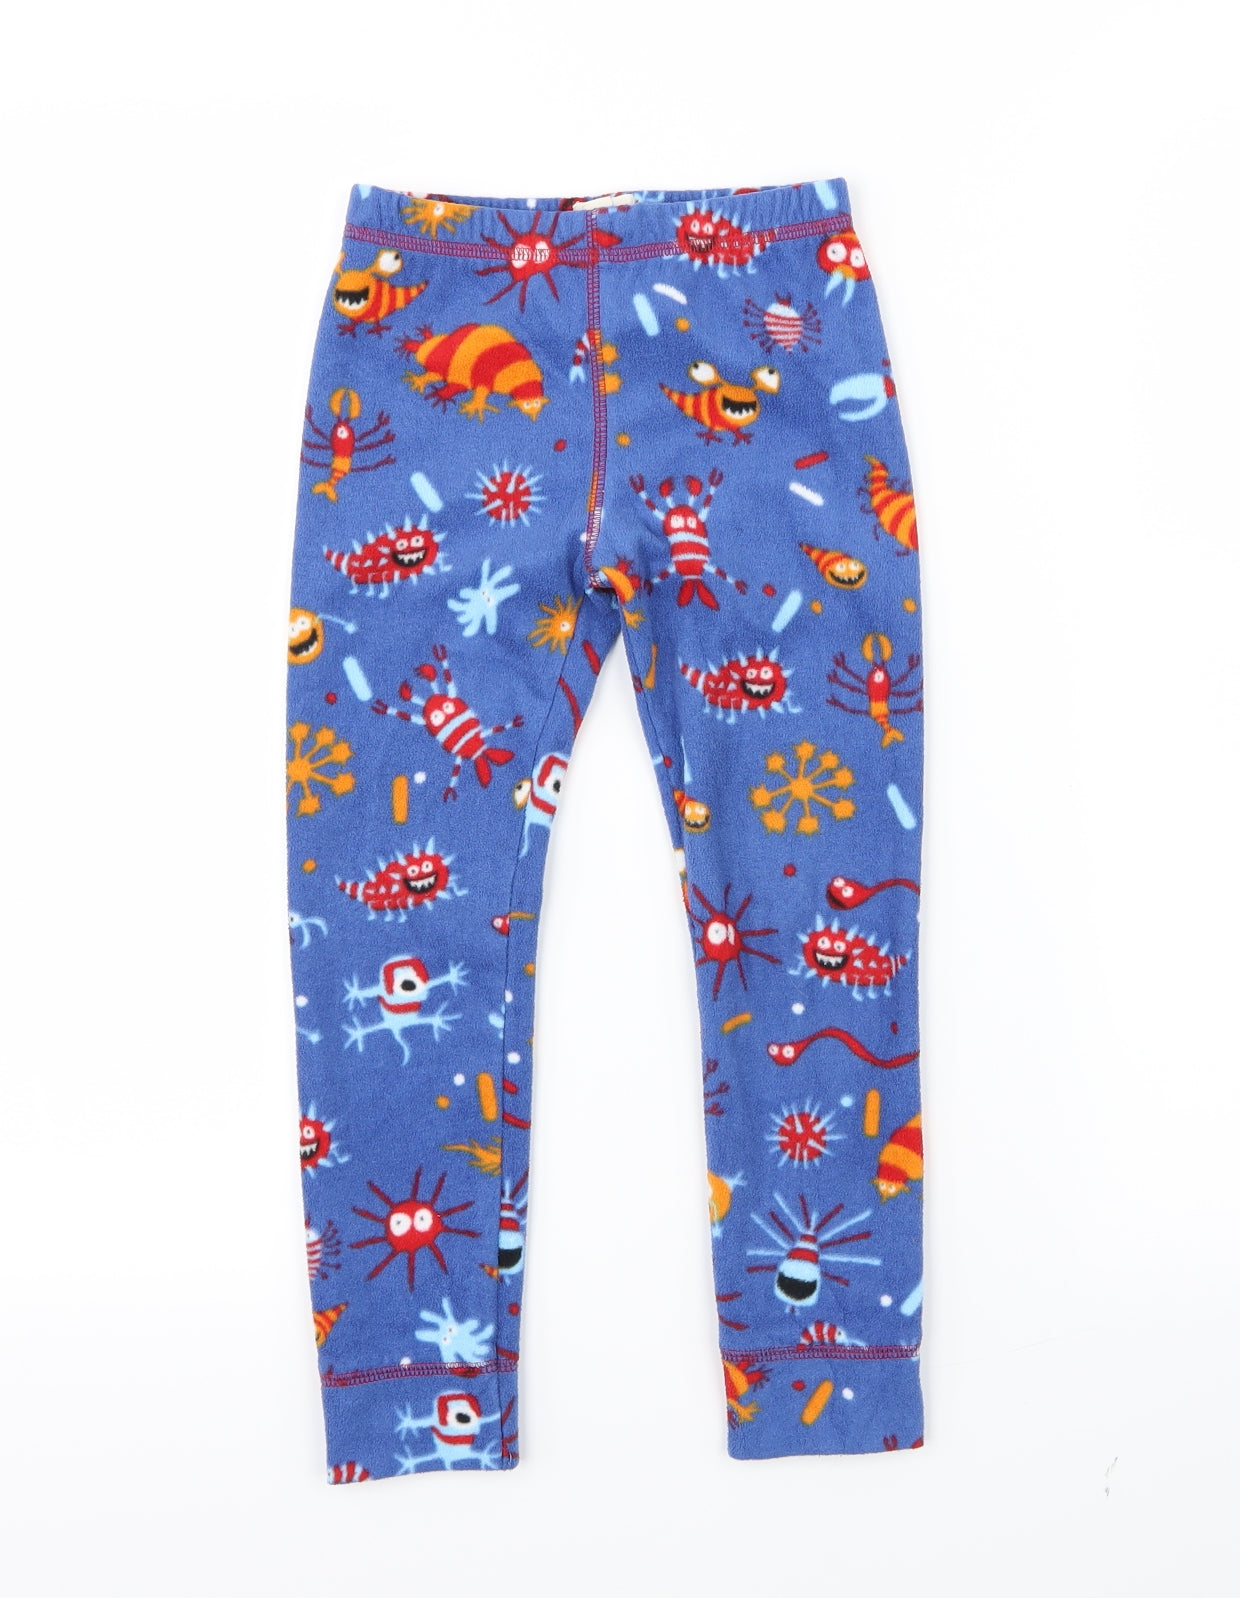 Hatley Boys Blue Geometric   Pyjama Pants Size 4 Years